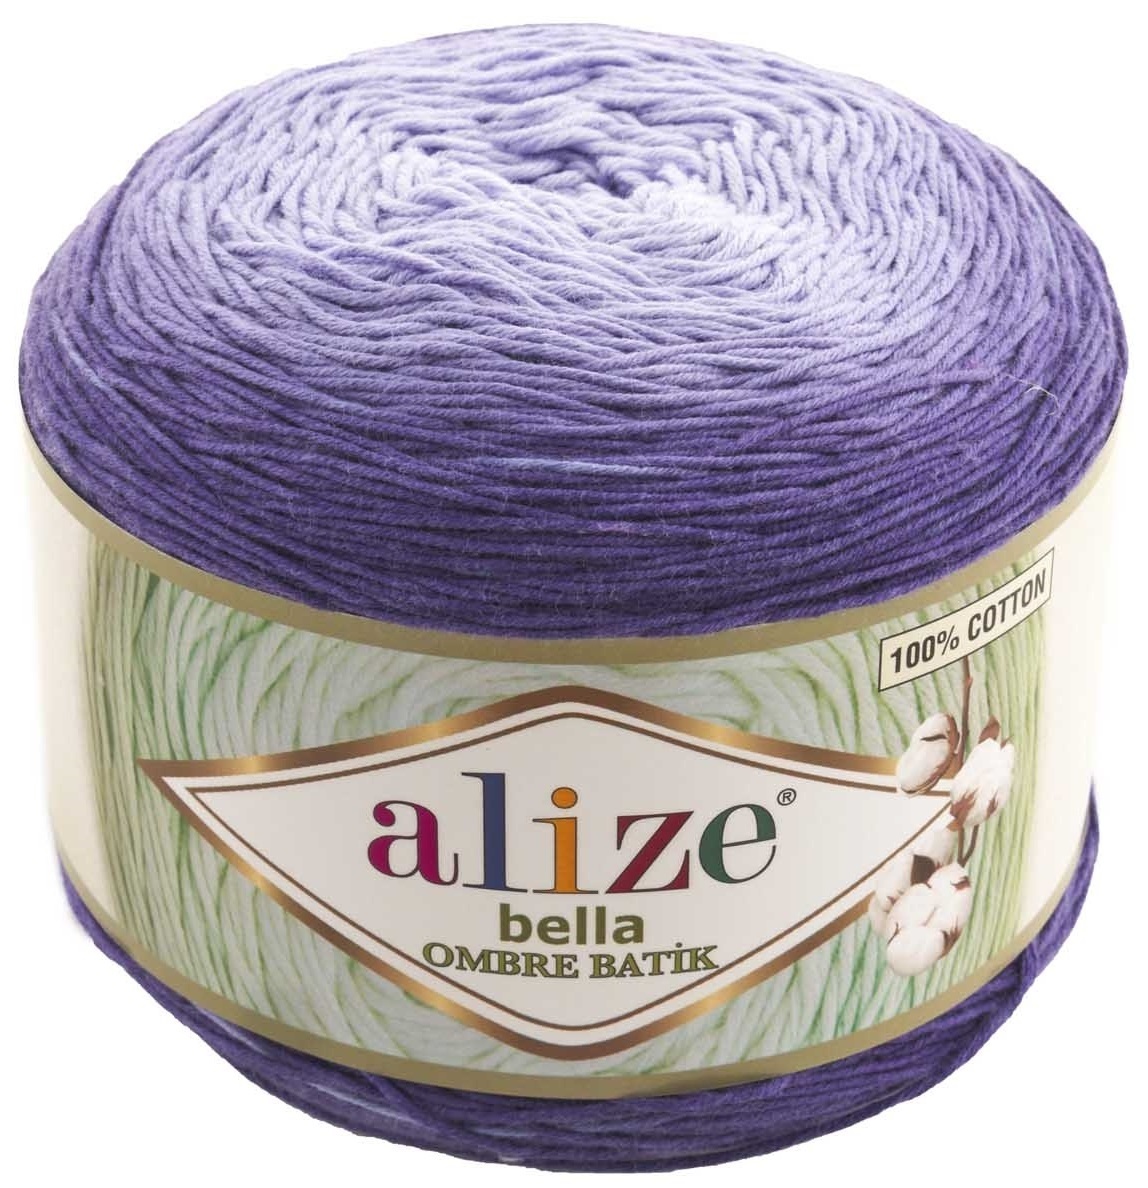 Alize Bella Ombre Batik 100% cotton, 2 Skein Value Pack, 500g фото 5